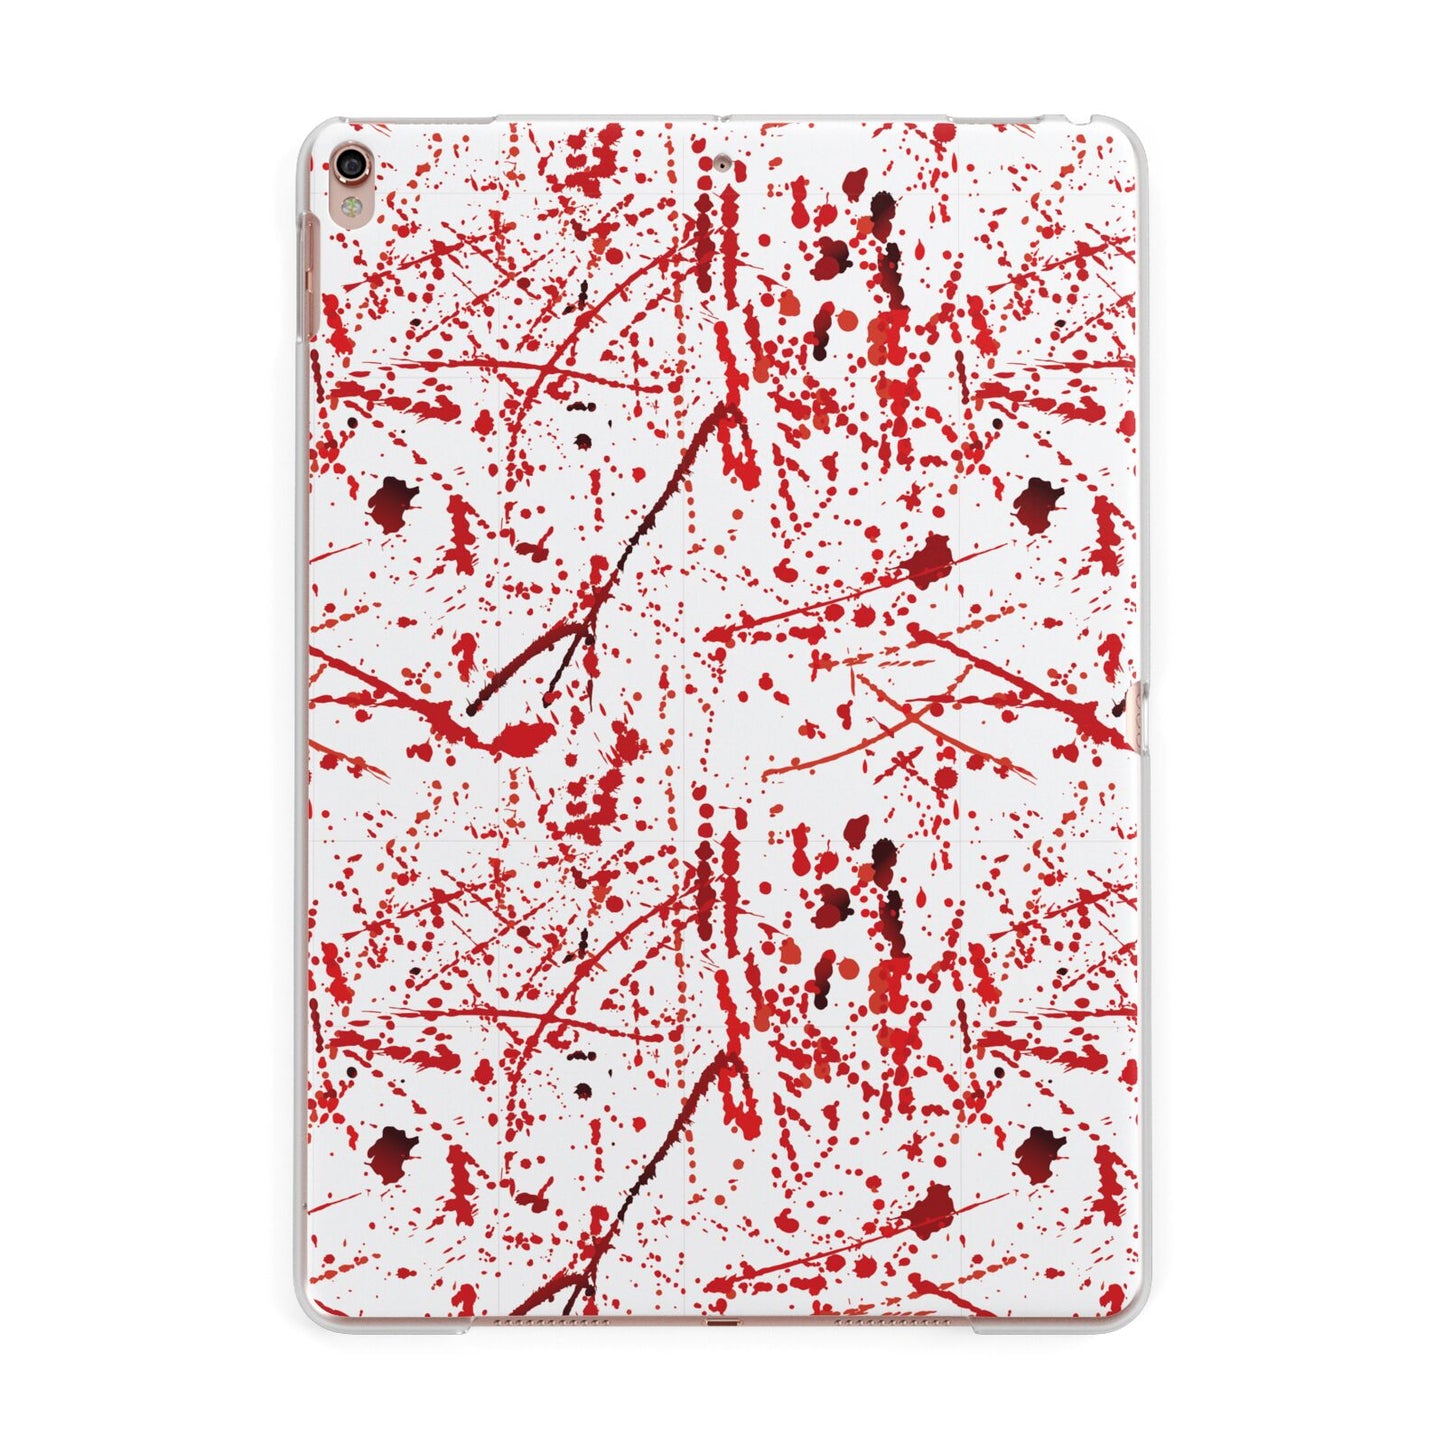 Blood Splatter Apple iPad Rose Gold Case